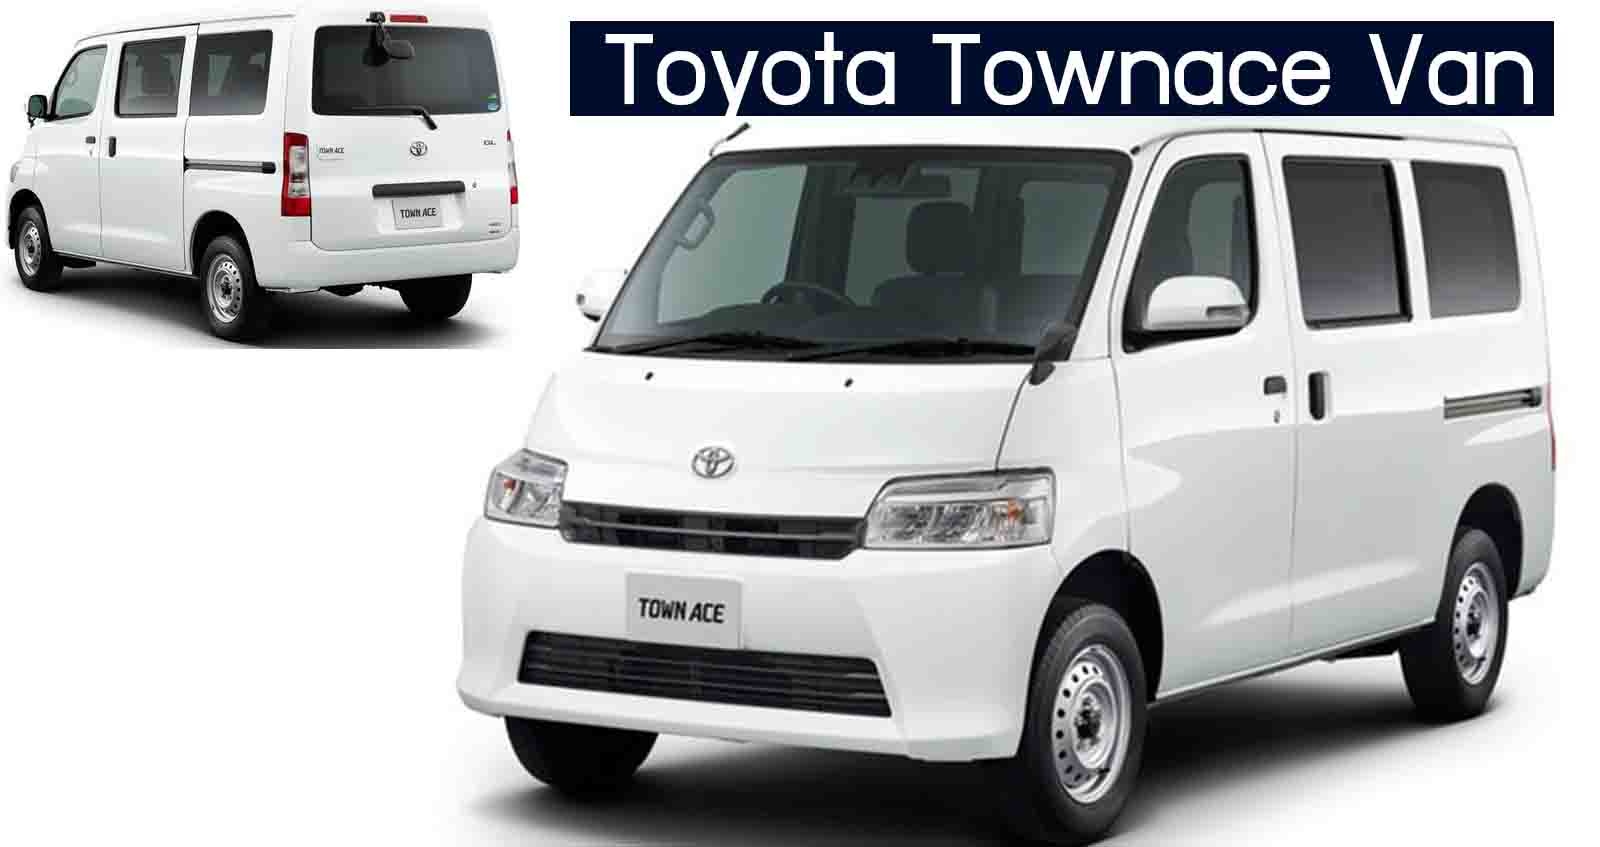 Toyota Townace Van ราคา 521,000 บาท ในญี่ปุ่น